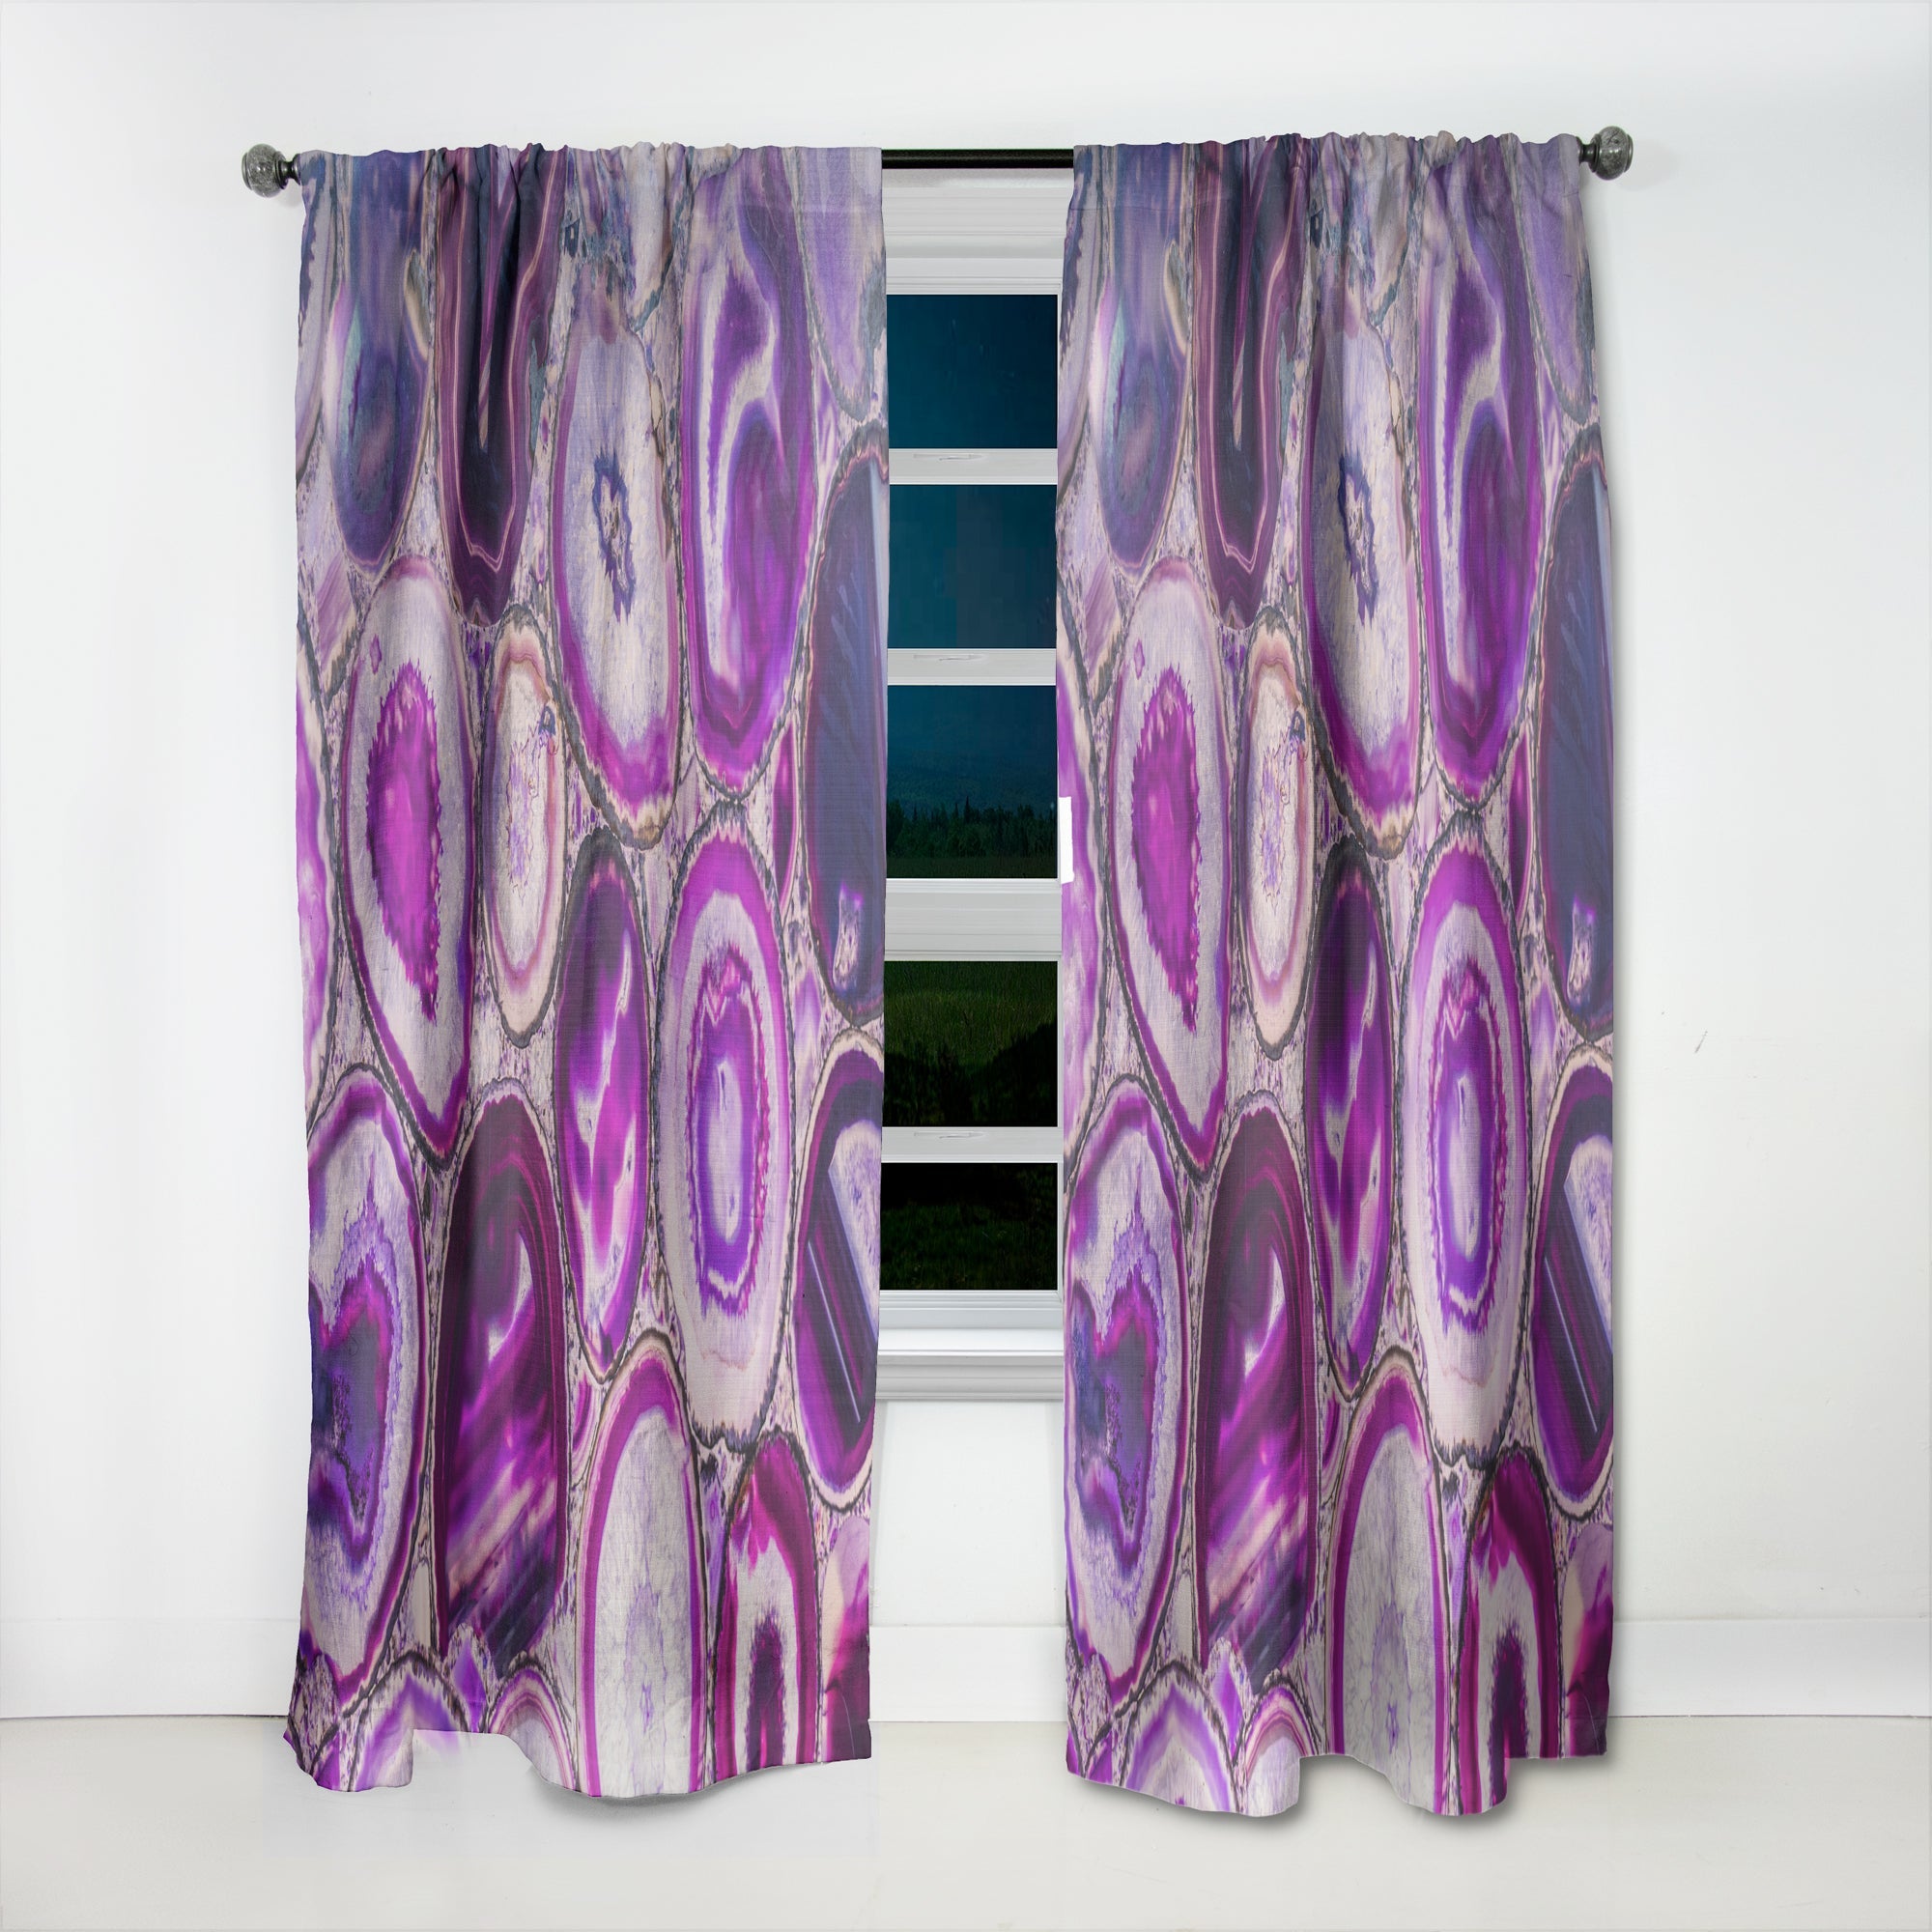 Violet Agate geode' Mid-Century Modern Curtain Panel